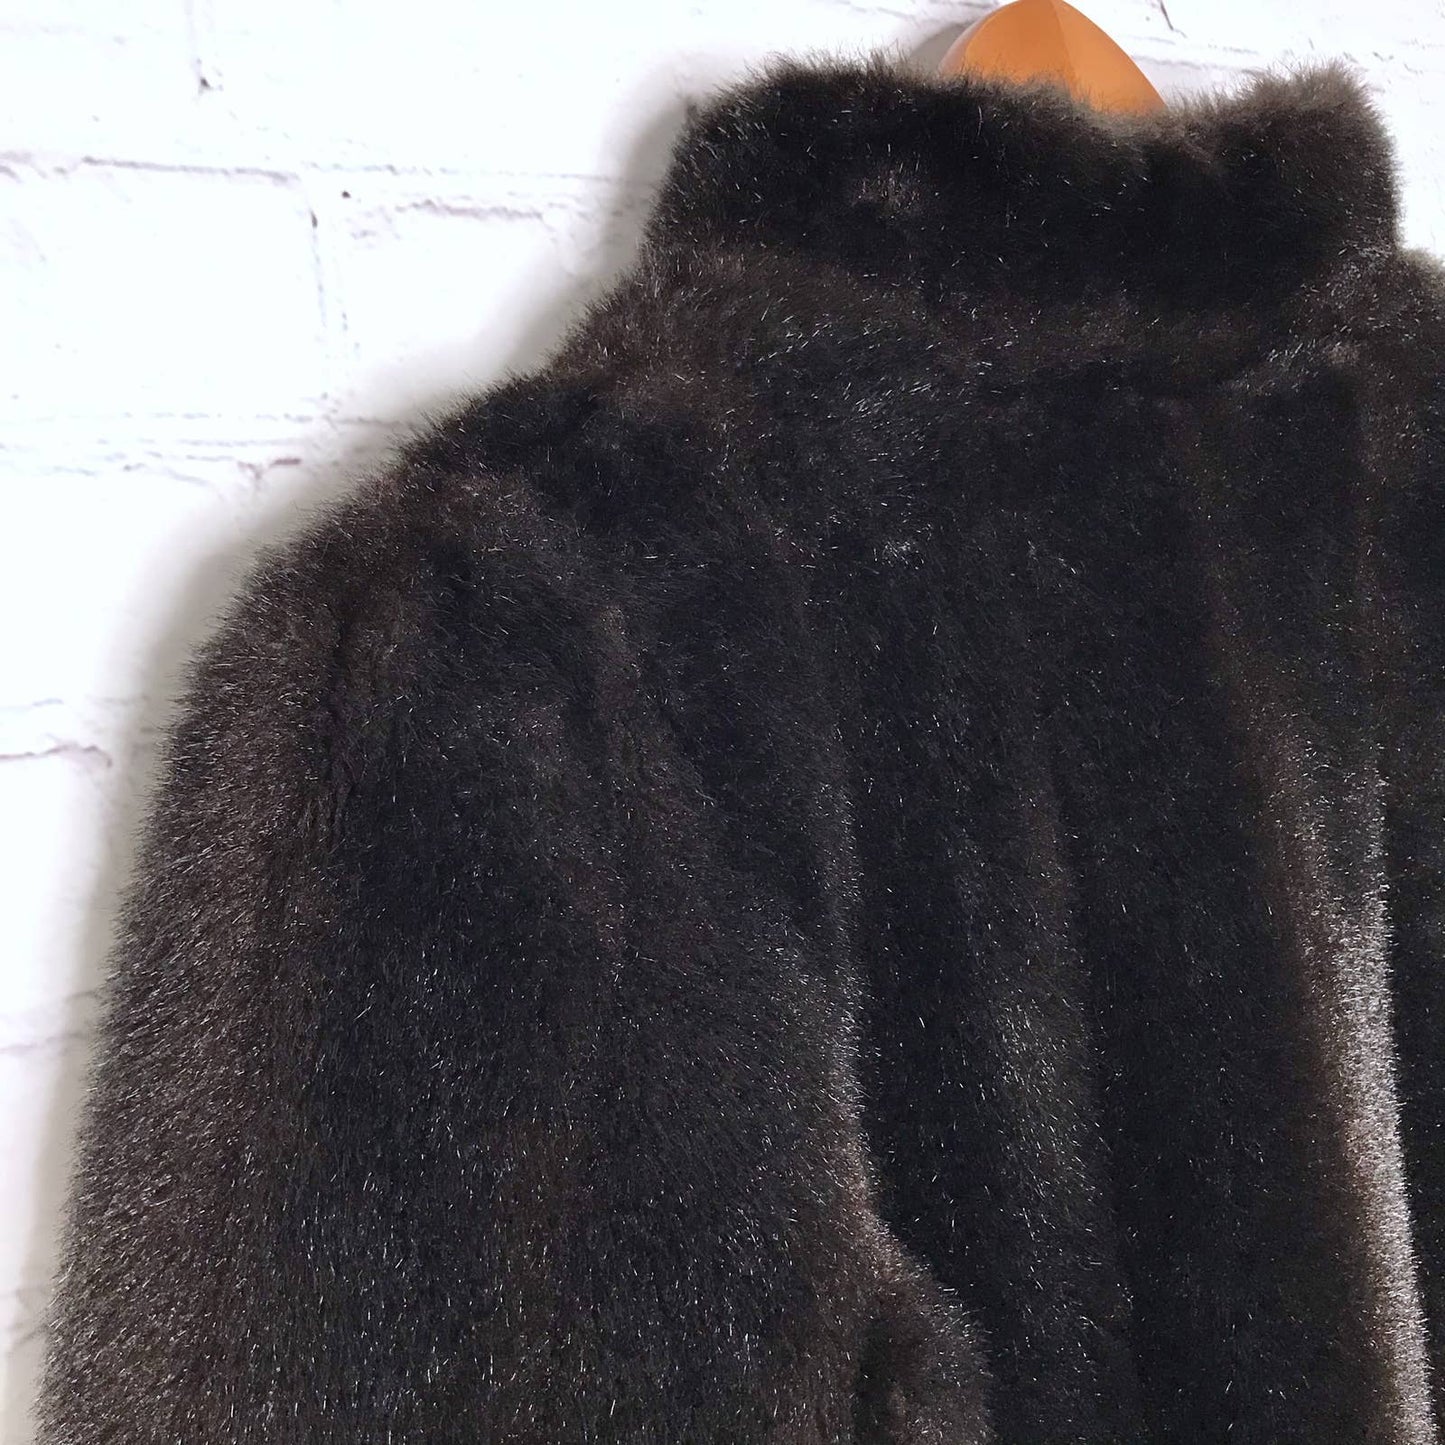 Vintage 80s Dark Brown Faux Fur Coat Made in USA Glam Vegan Size S M